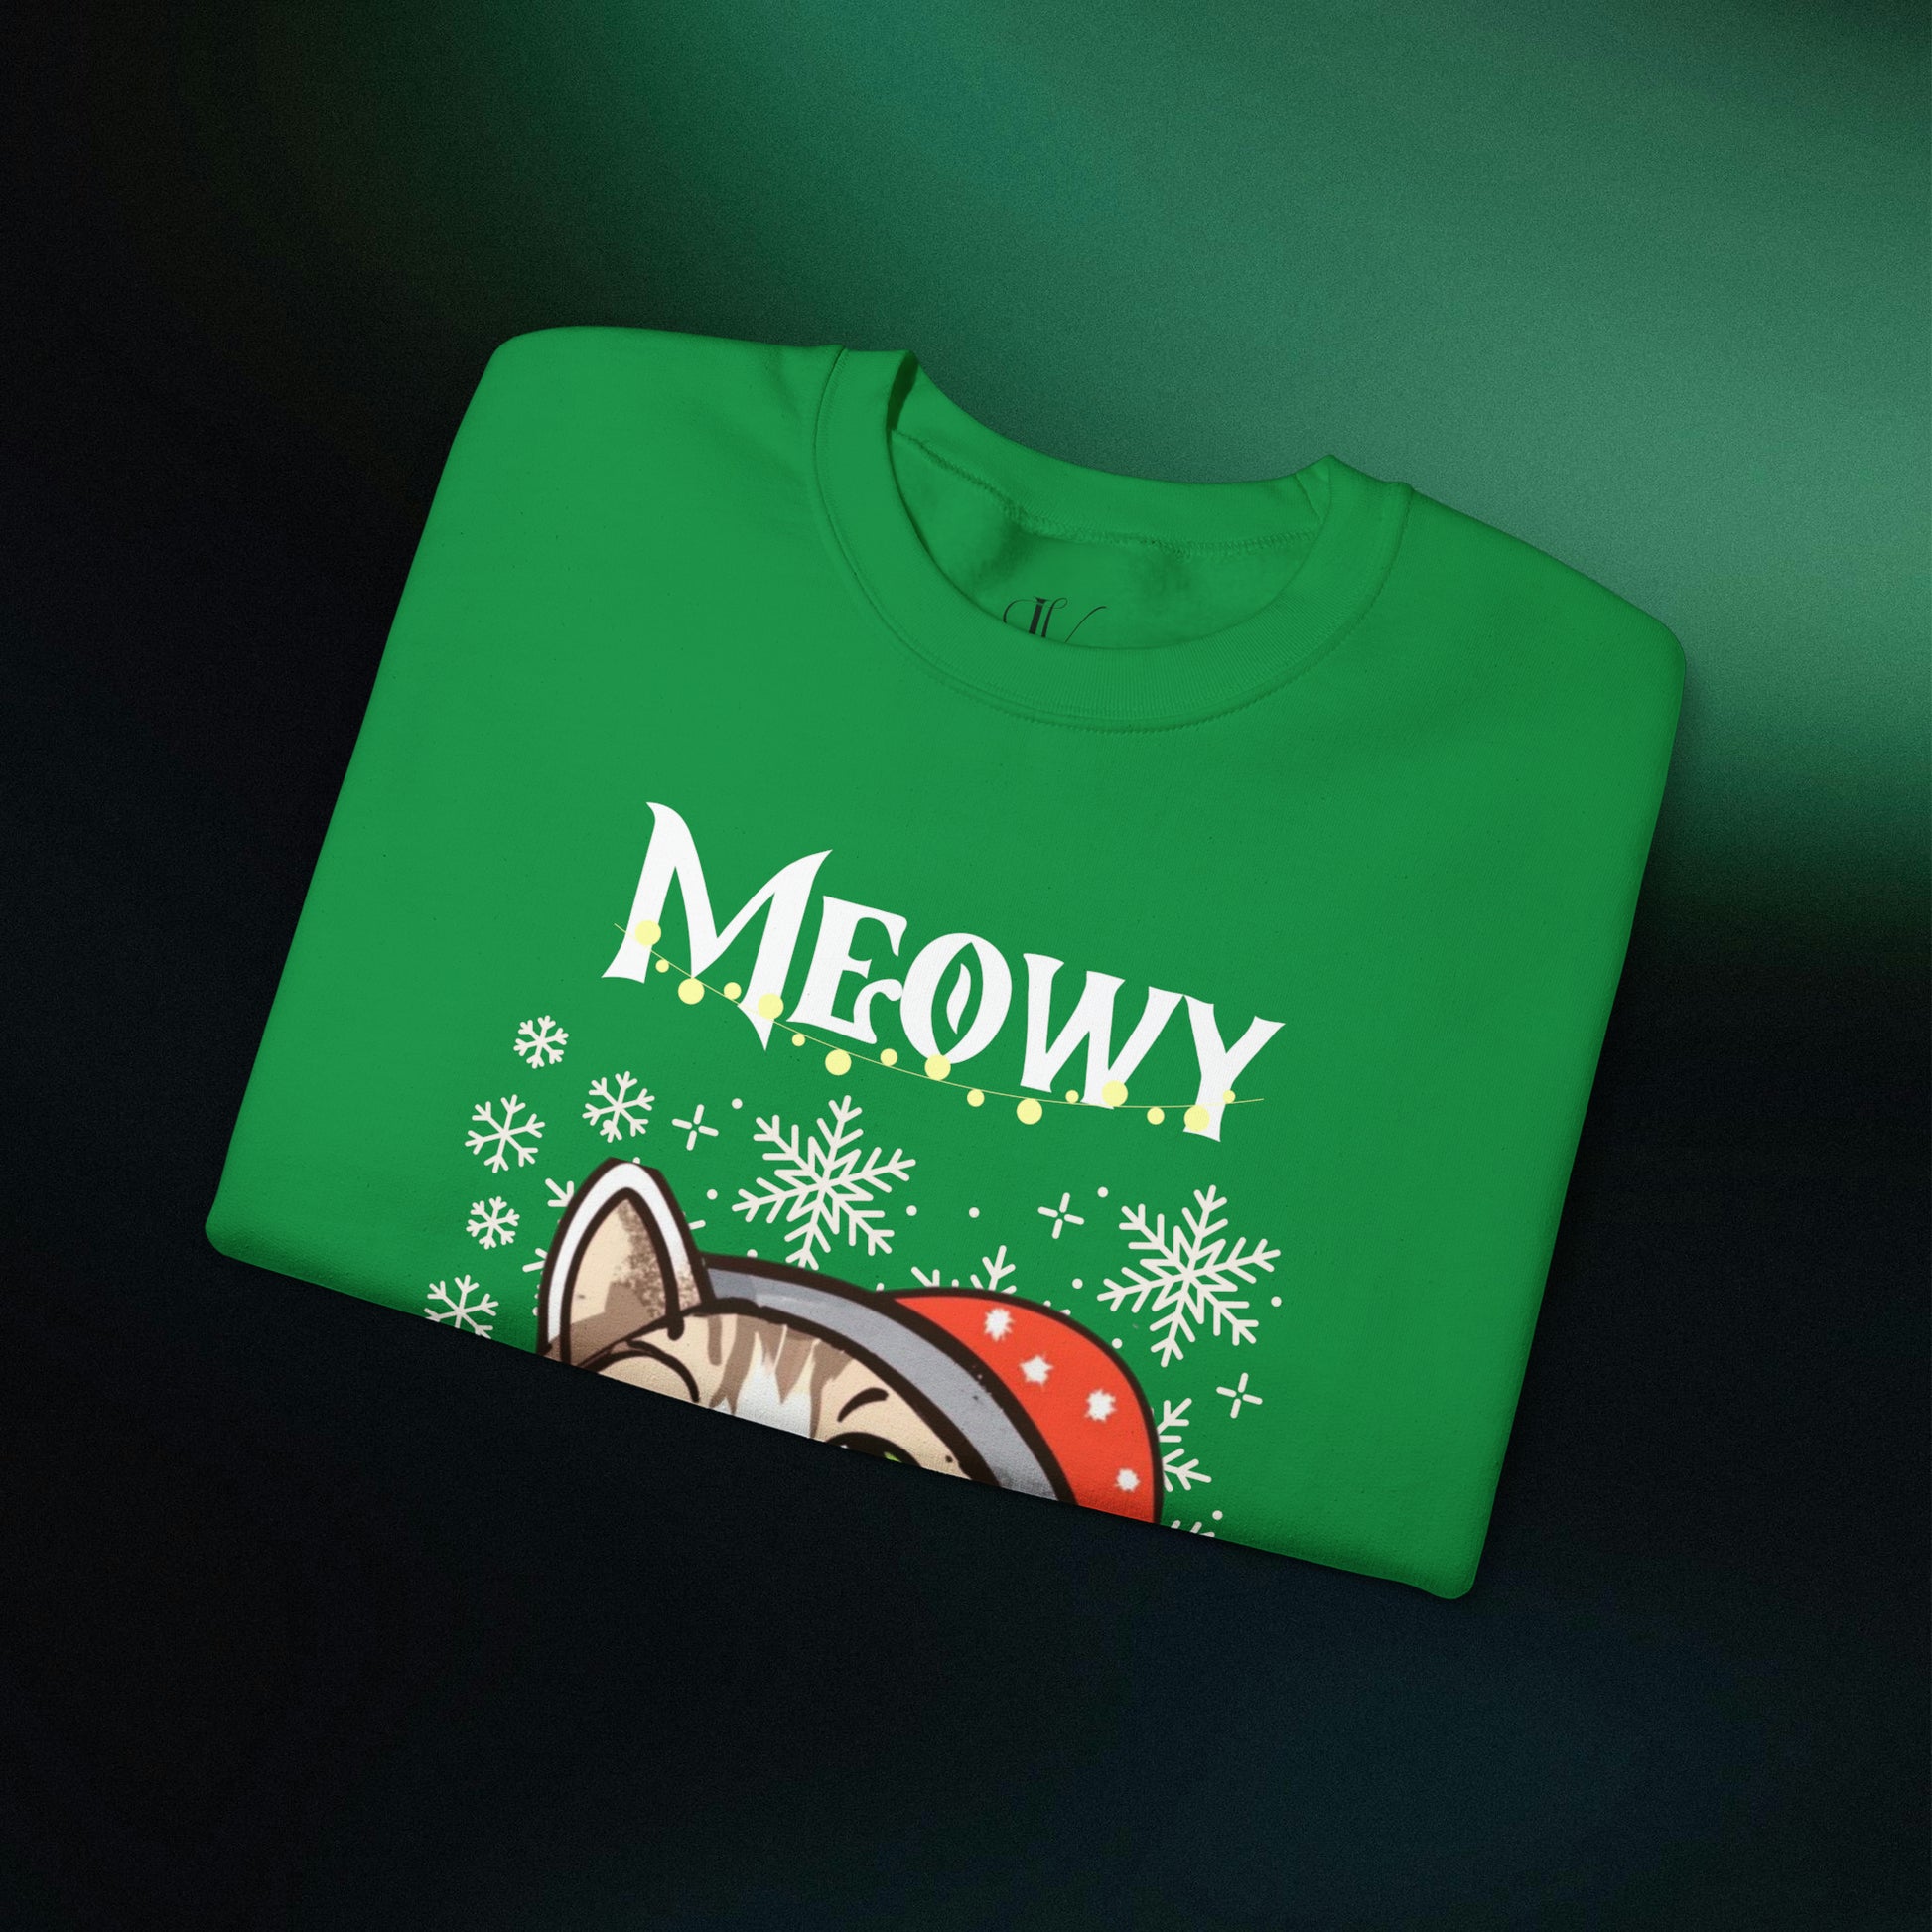 Feline Festivities Unleashed: Cute Christmas Cat Sweatshirt, Meowy Christmas Cat Sweater, Gifts for Cat Lovers | Christmas Lights Shirt, Christmas Cats Shirt - MEOWY CATMAS Sweatshirt   